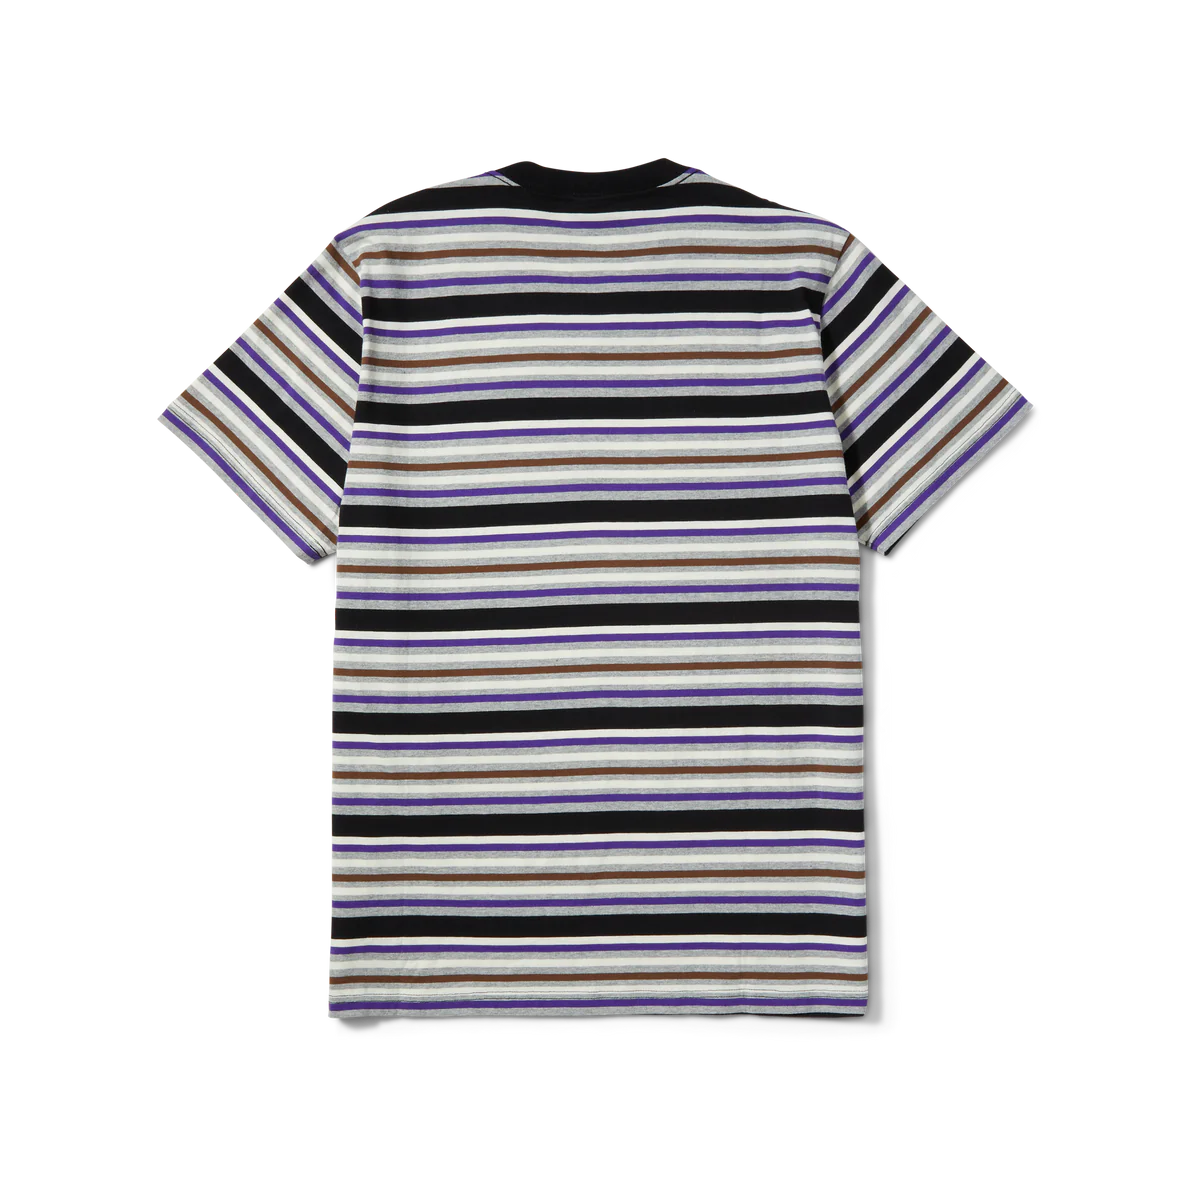 Cheshire S/s Stripe Knit Top (Black)